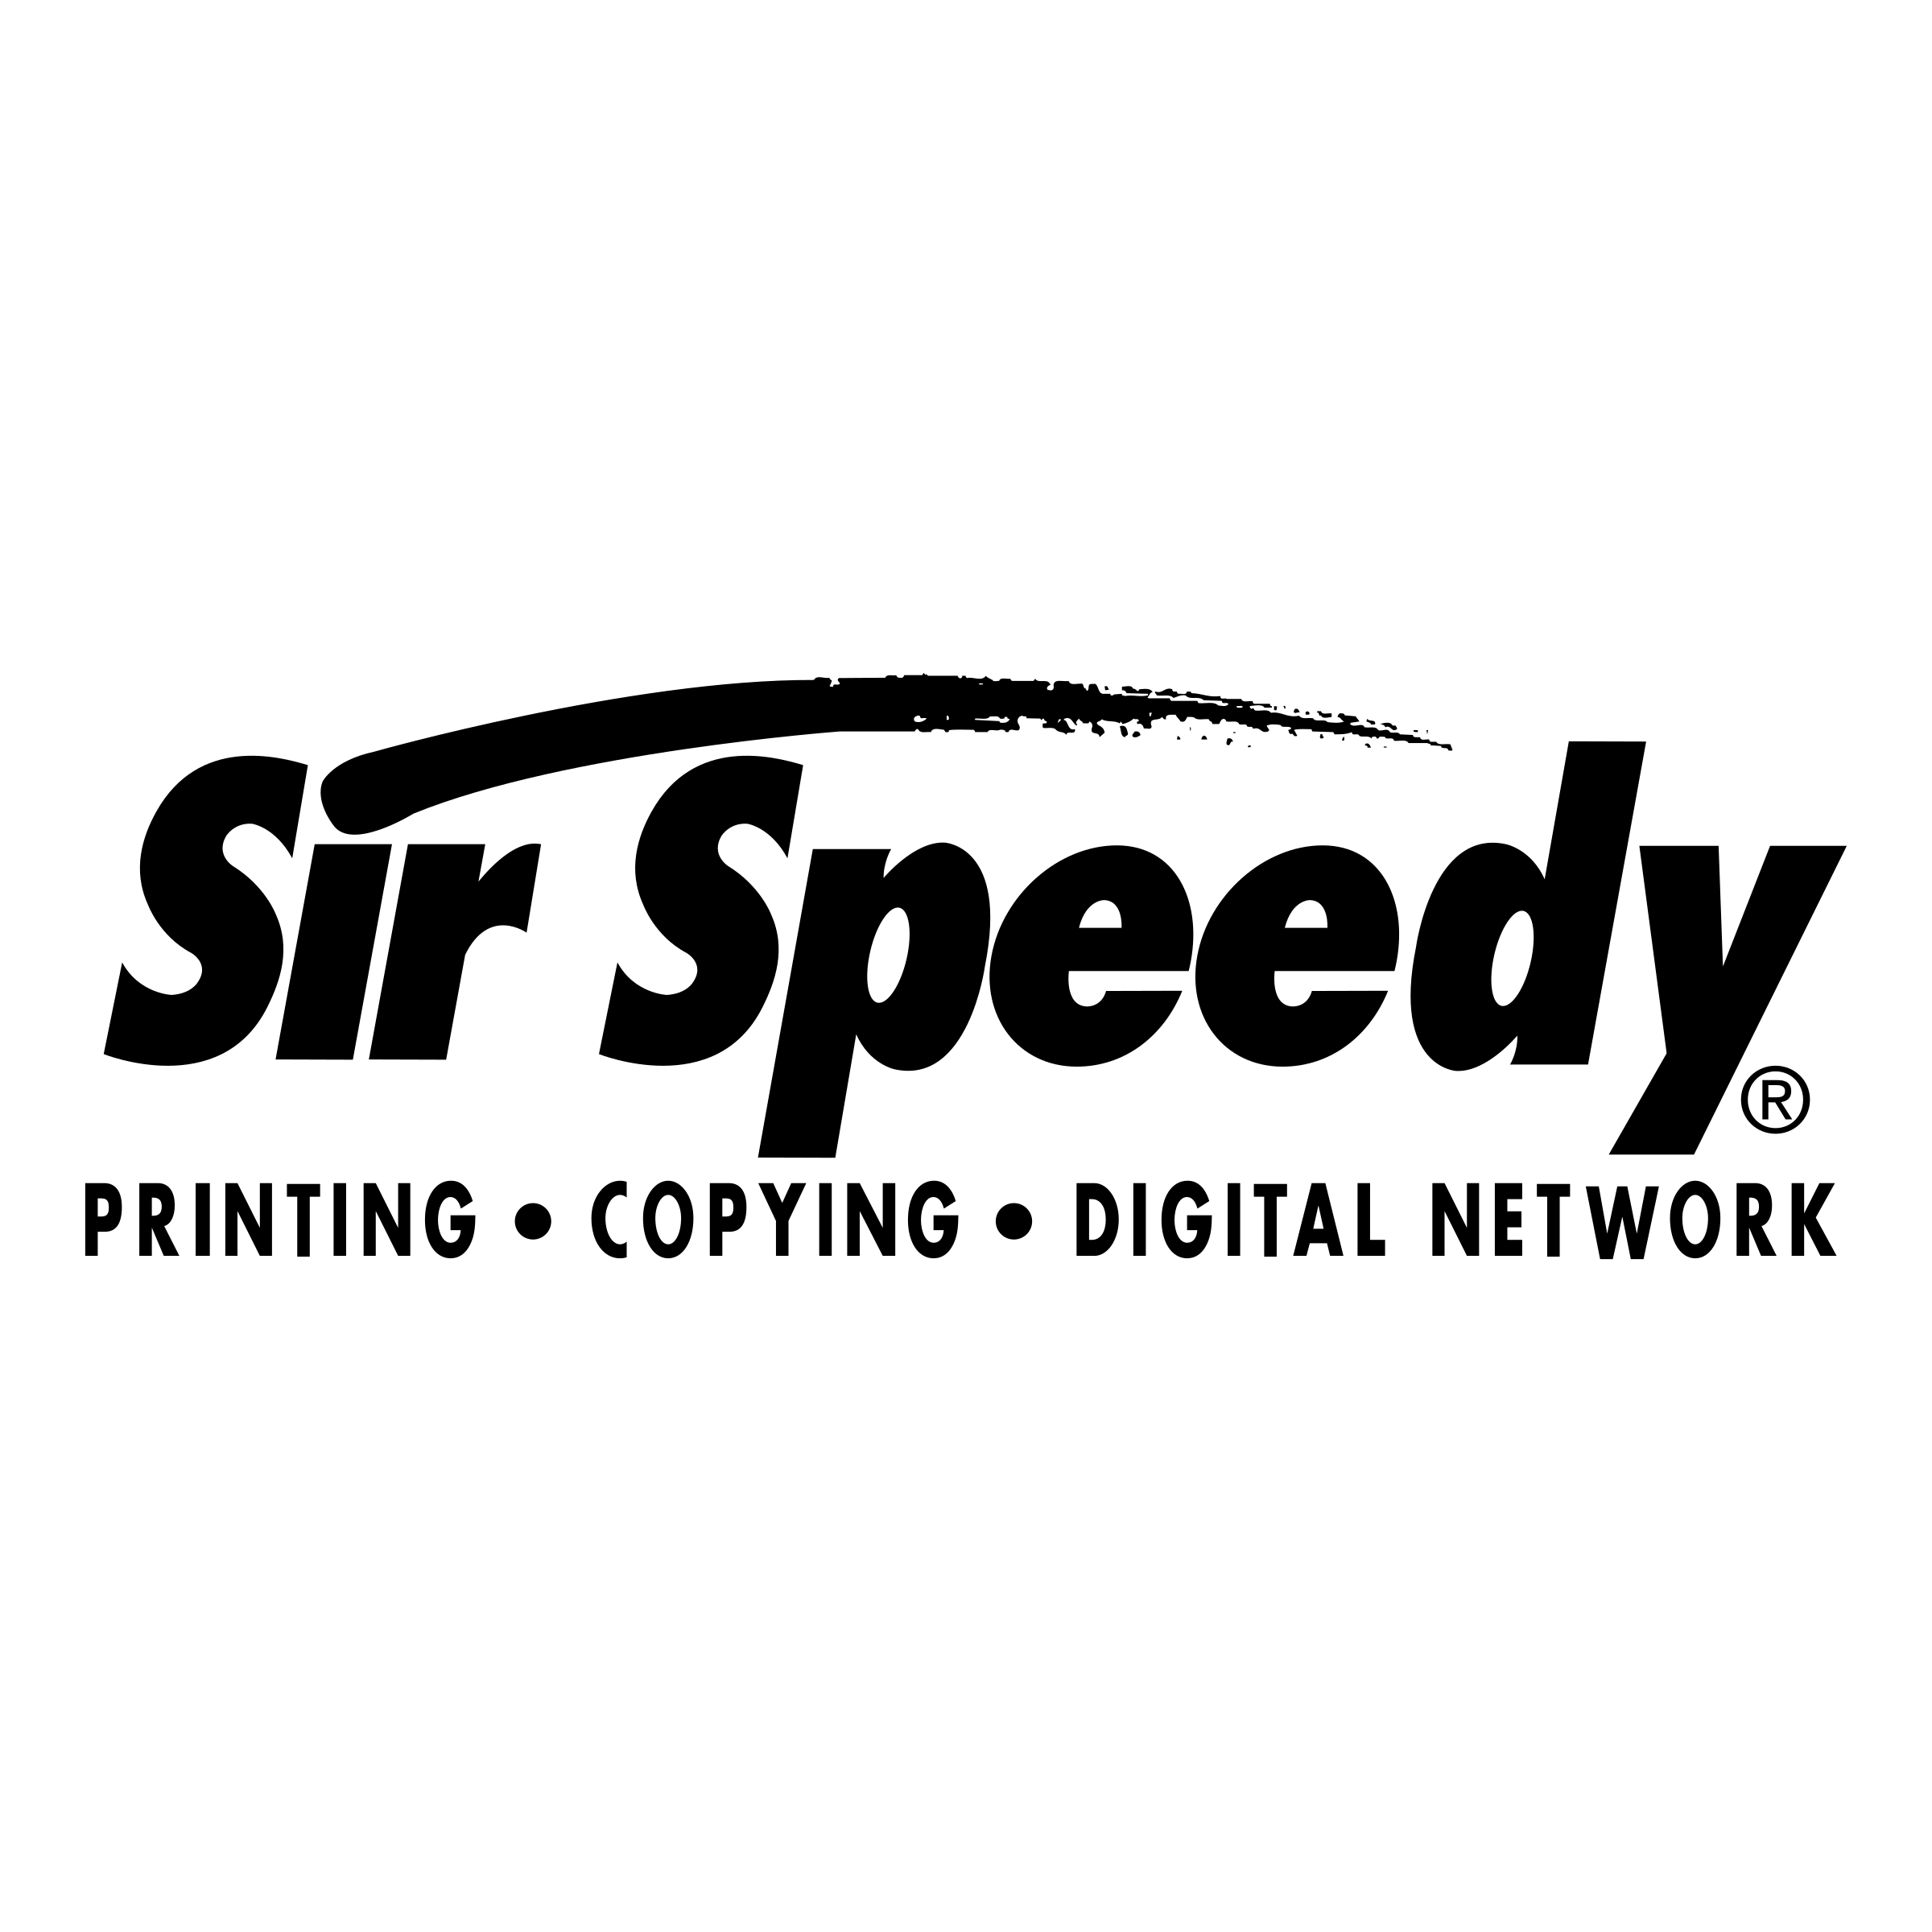 Print Logo PNG Transparent & SVG Vector - Freebie Supply